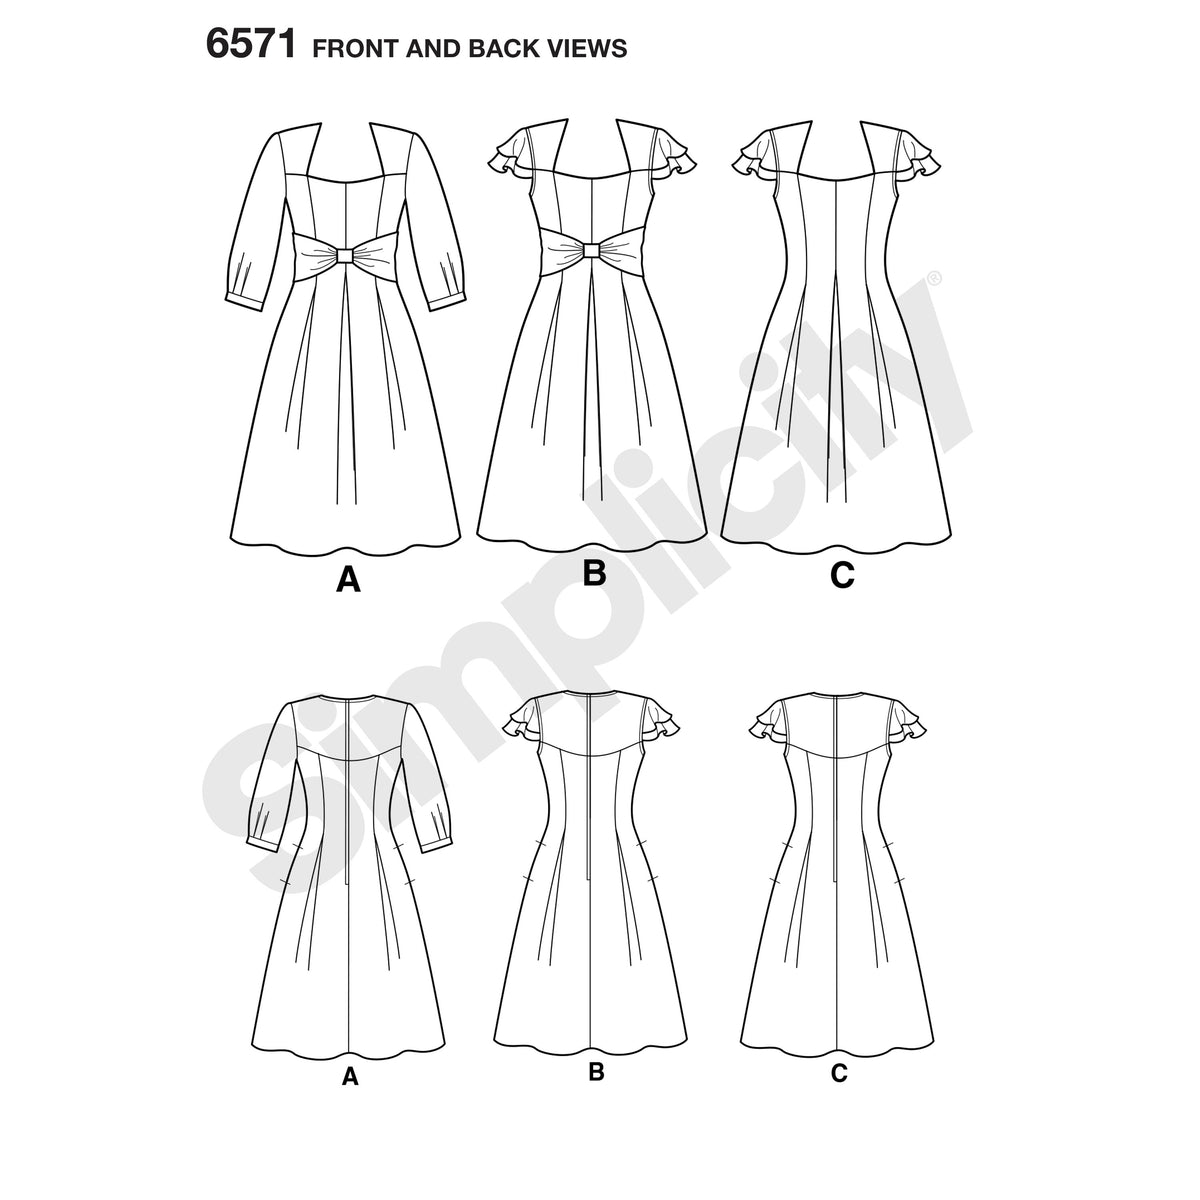 6571 New Look Pattern 6571 Misses' Dresses